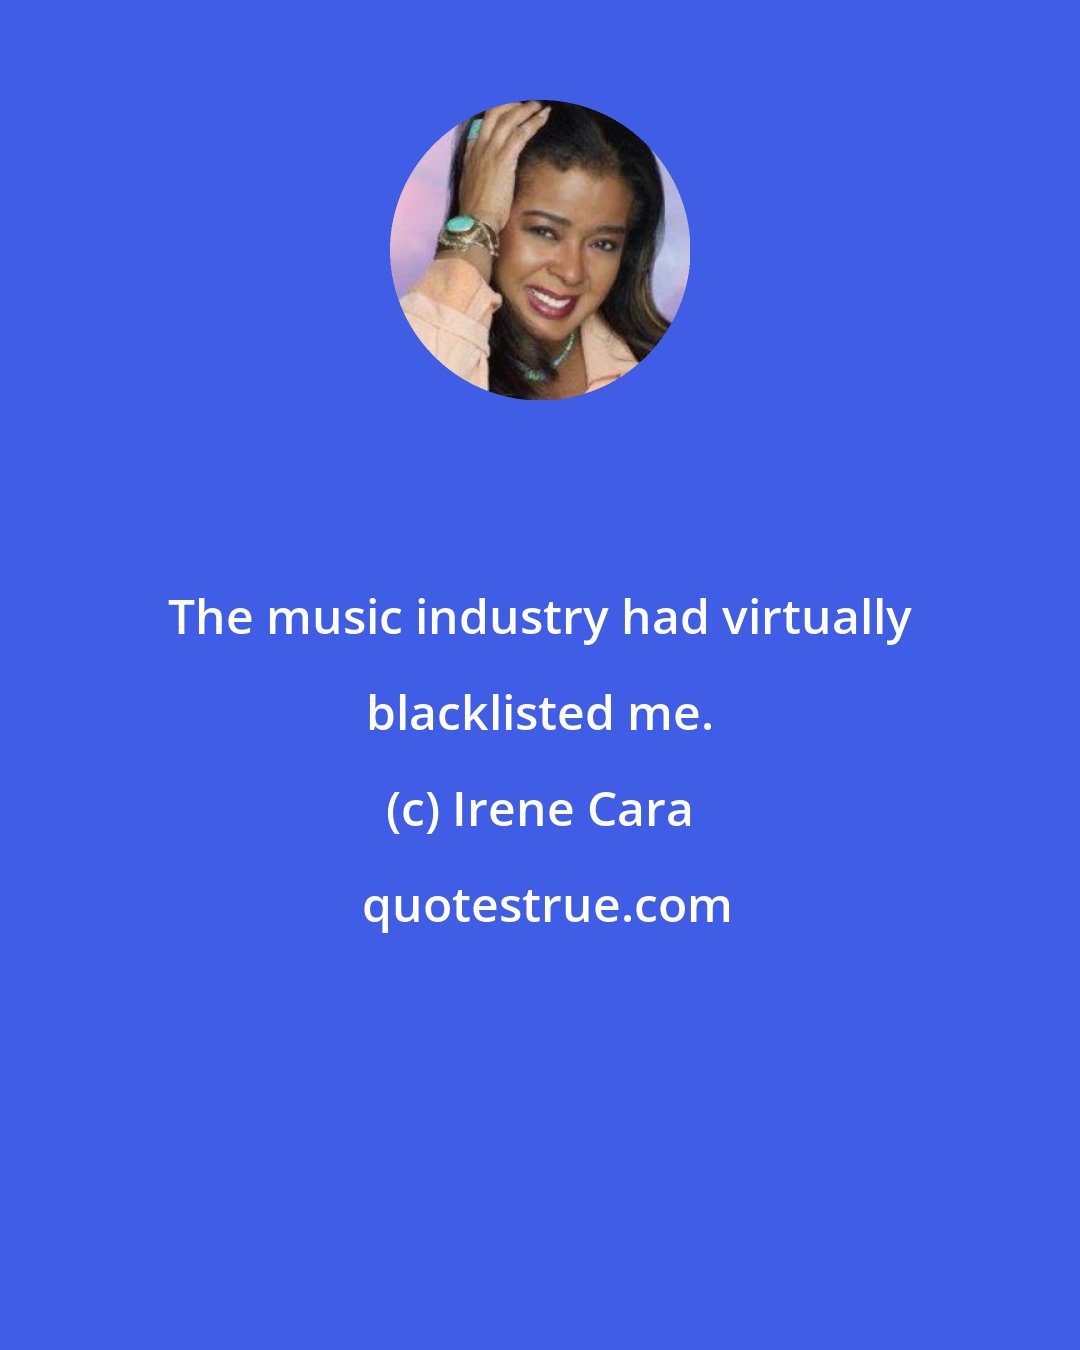 Irene Cara: The music industry had virtually blacklisted me.